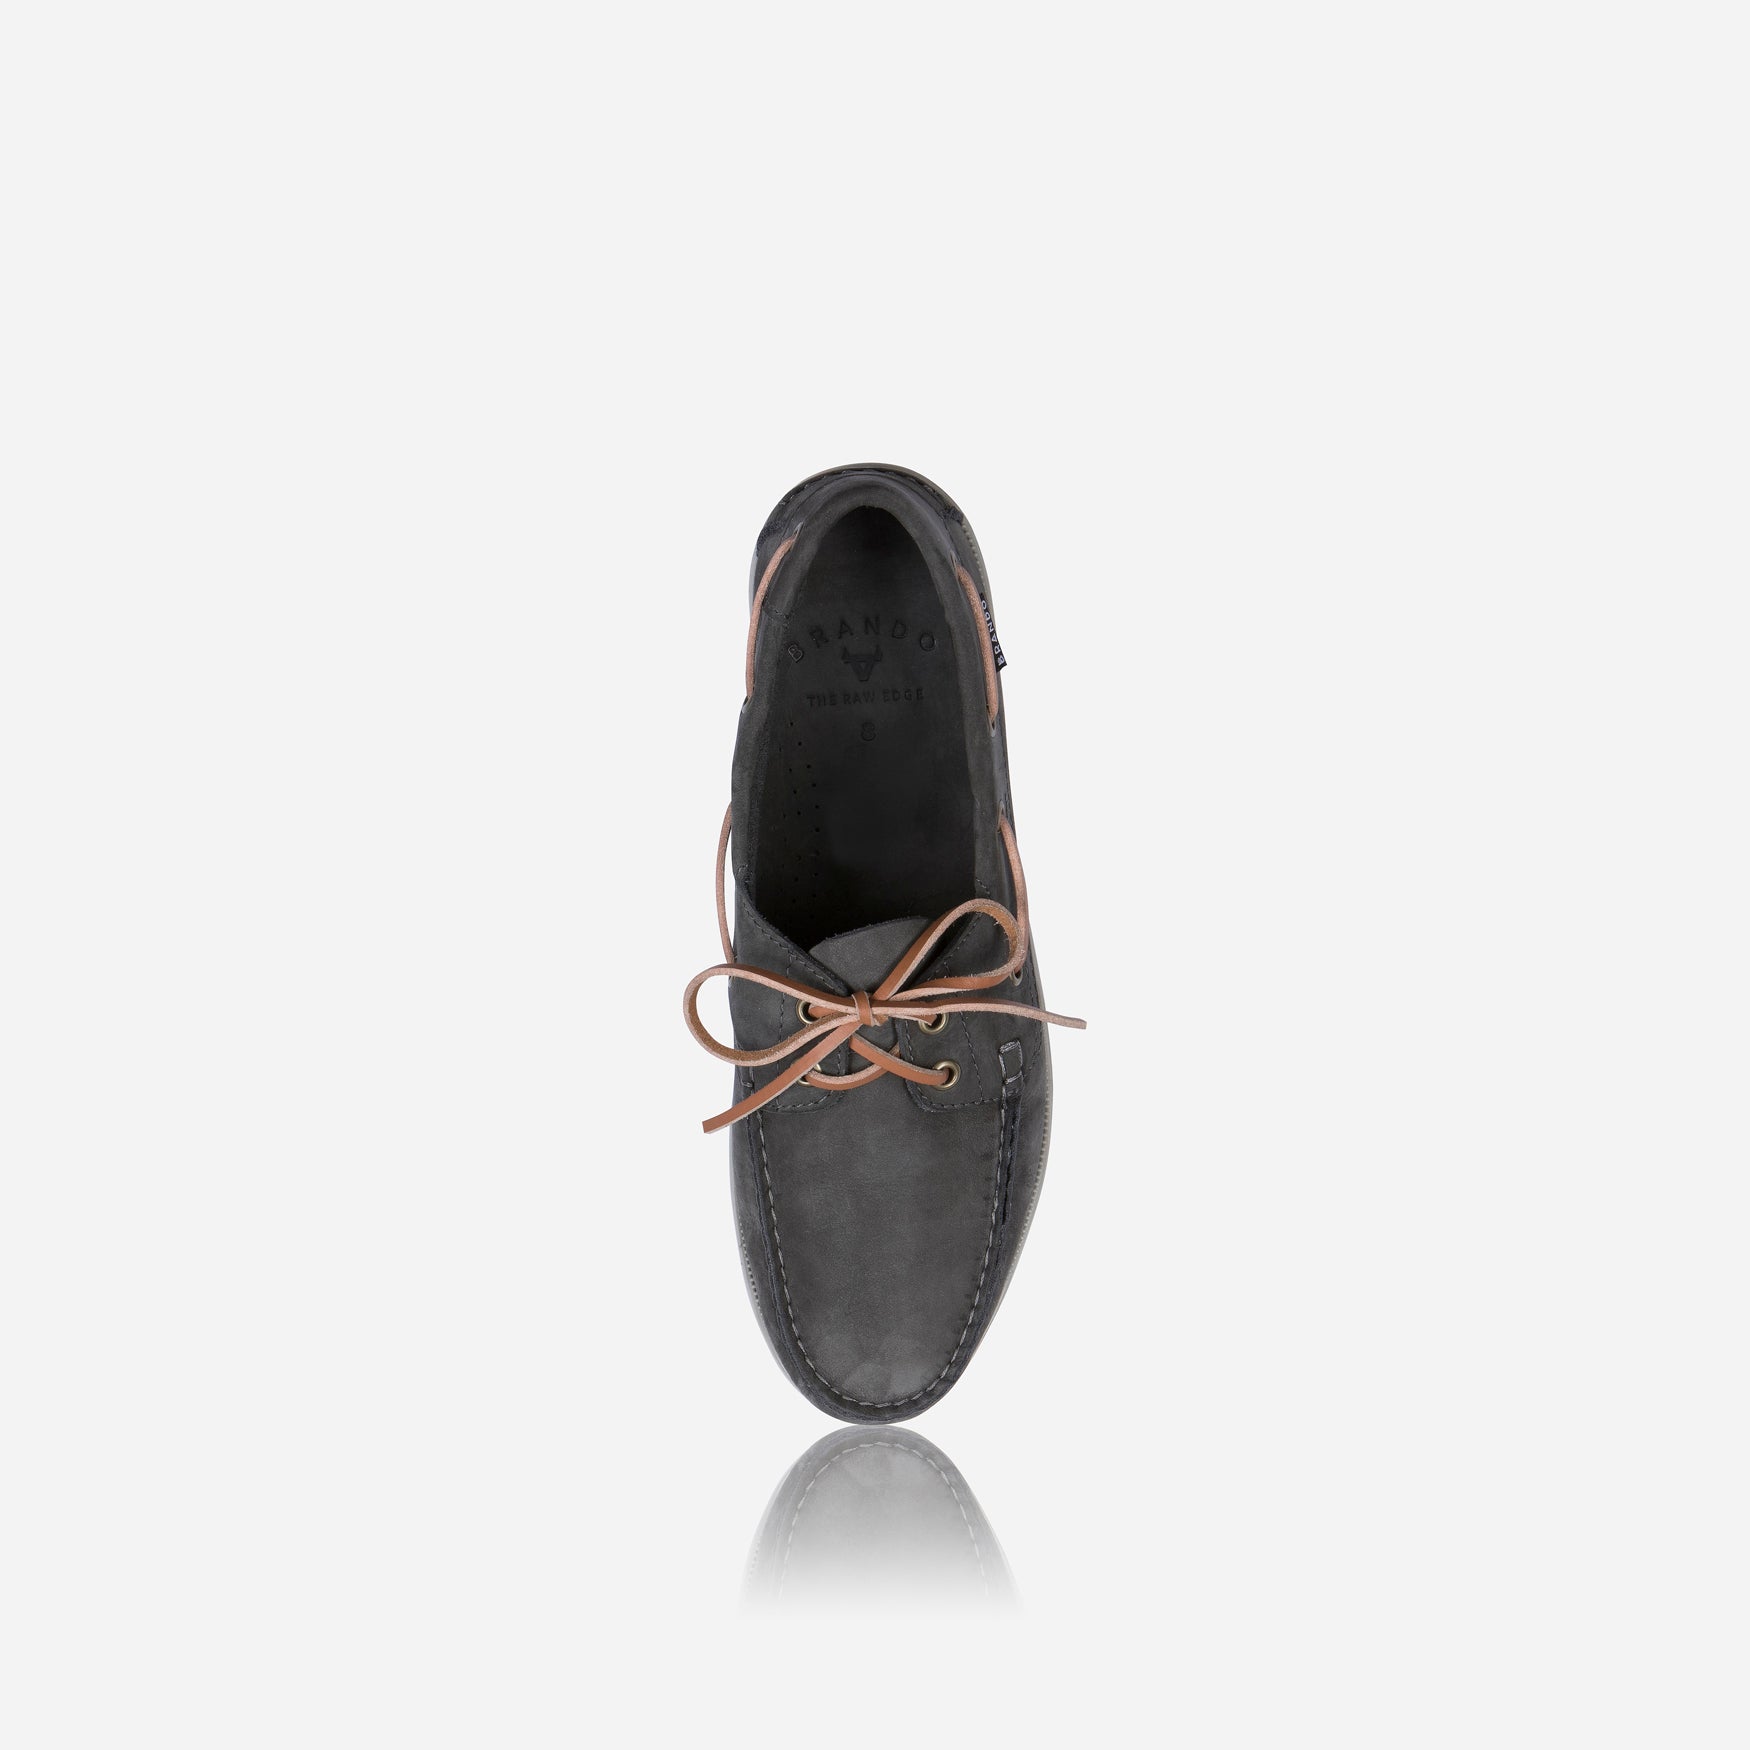 Nautilus Boat shoe, Petrol - Leather Shoes | Brando Leather South Africa